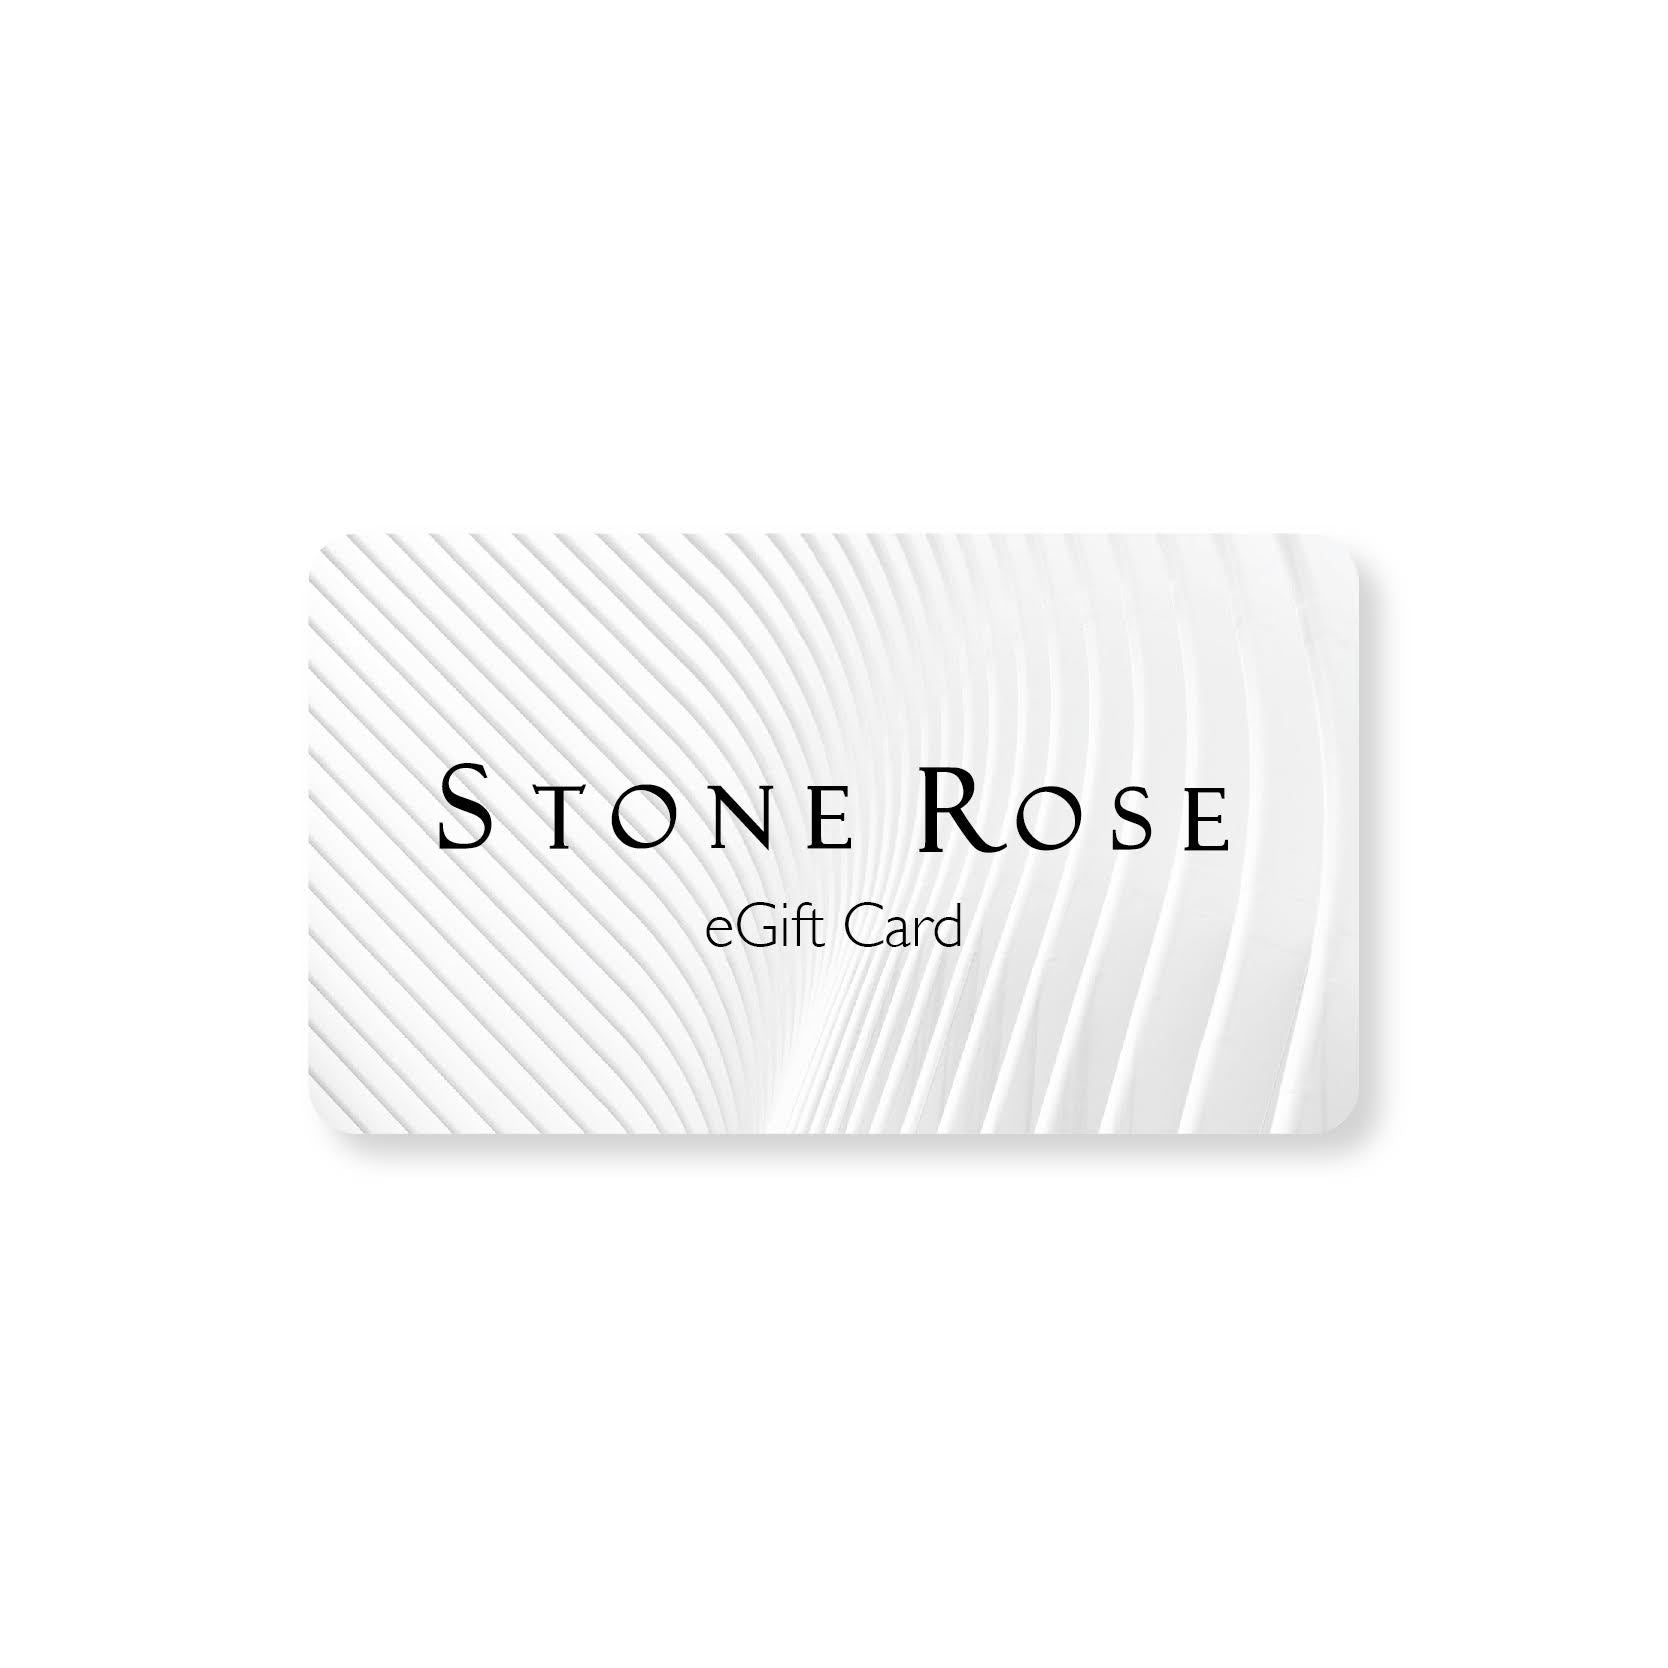 Stone Rose eGift Card